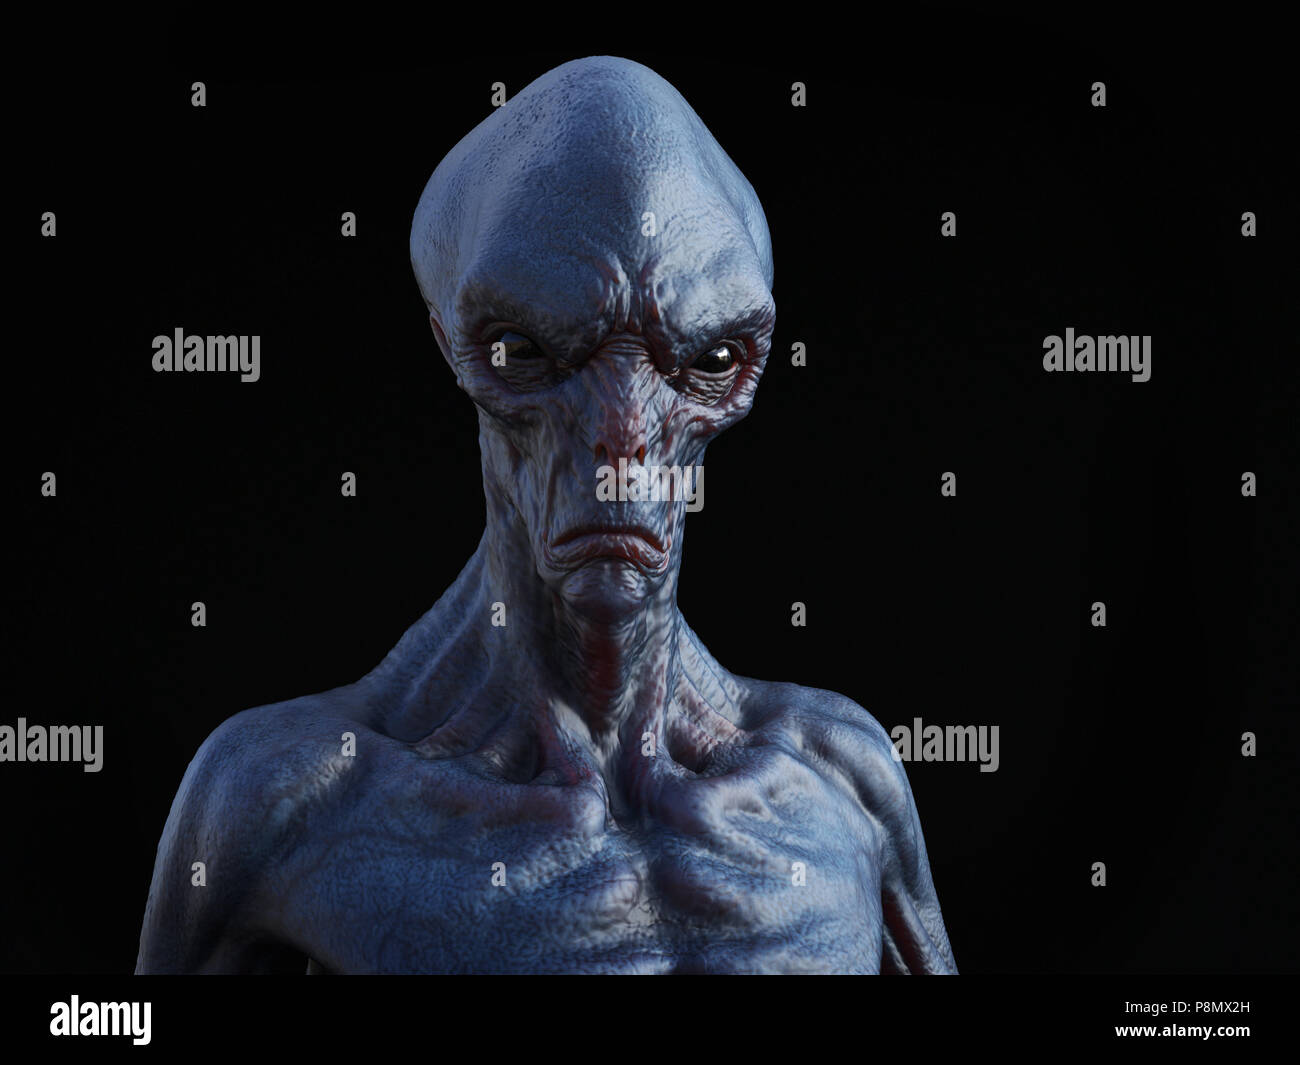 Portrait of an alien creature, 3D rendering. Black background. Stock Photo